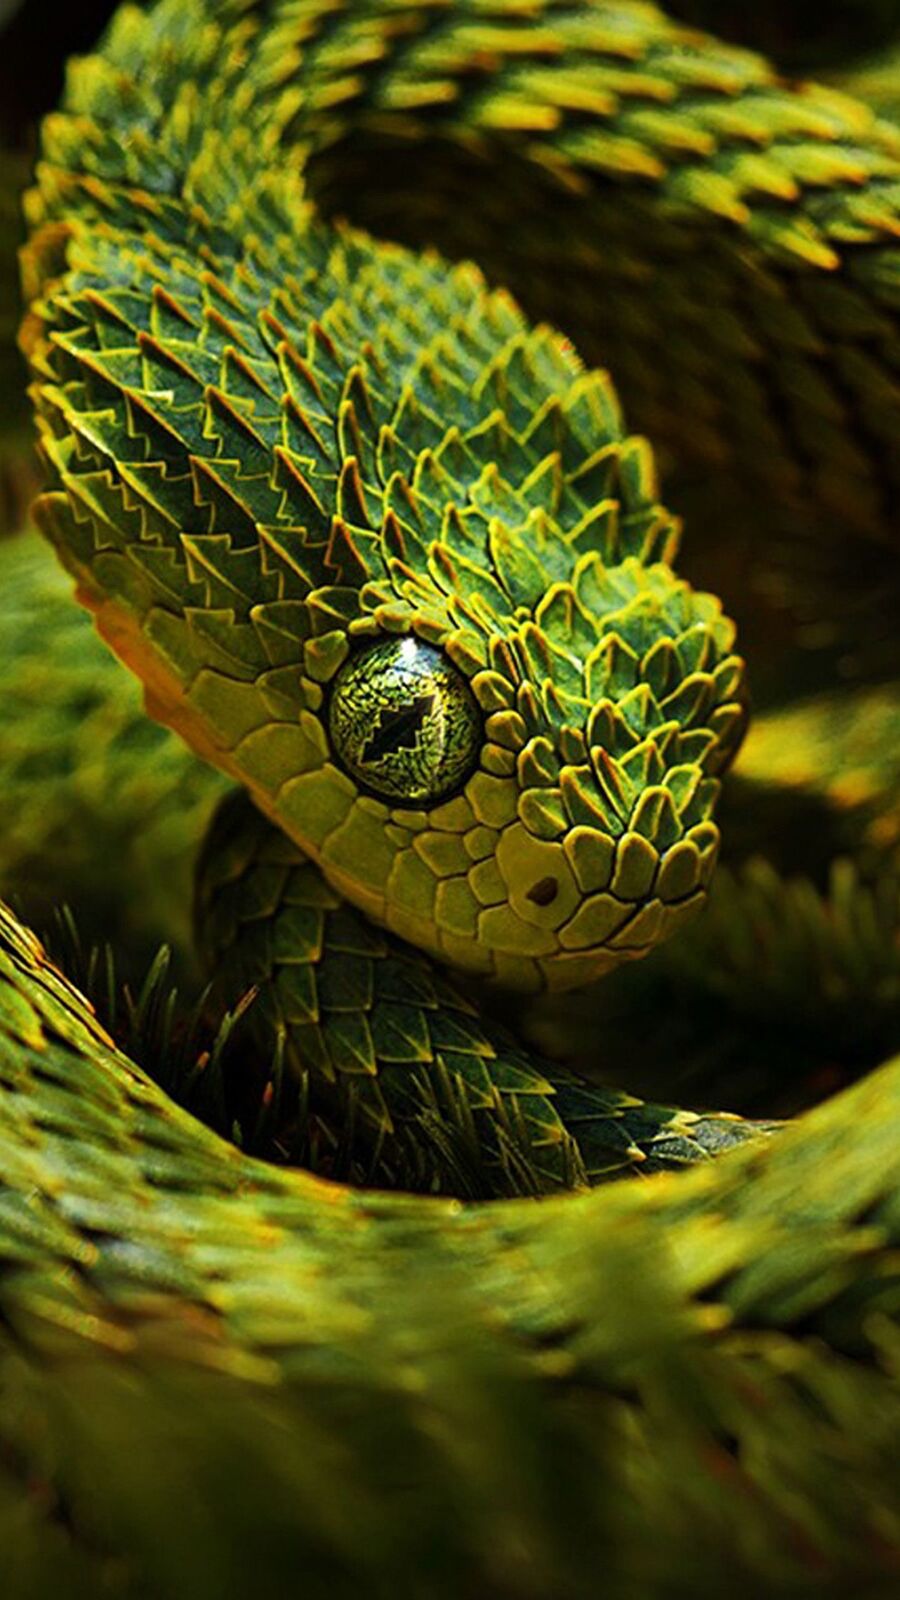 اجمل صور ثعبان للايفون , خلفيات مصورة ثعابين رعب , 2021 Snake iPhone